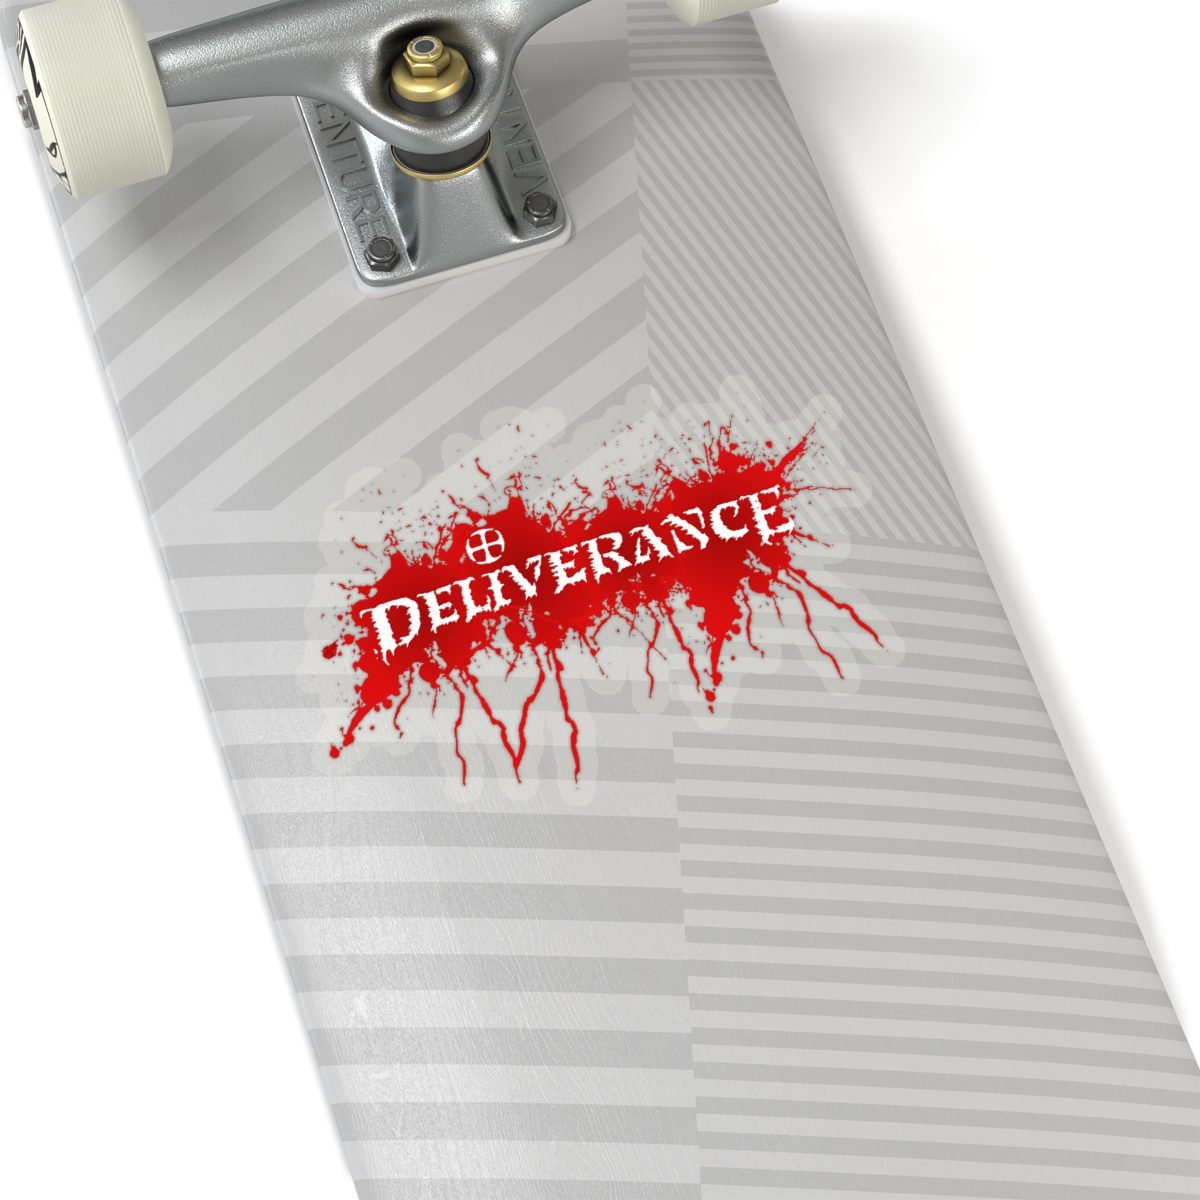 Deliverance Splatter Logo Die Cut Stickers